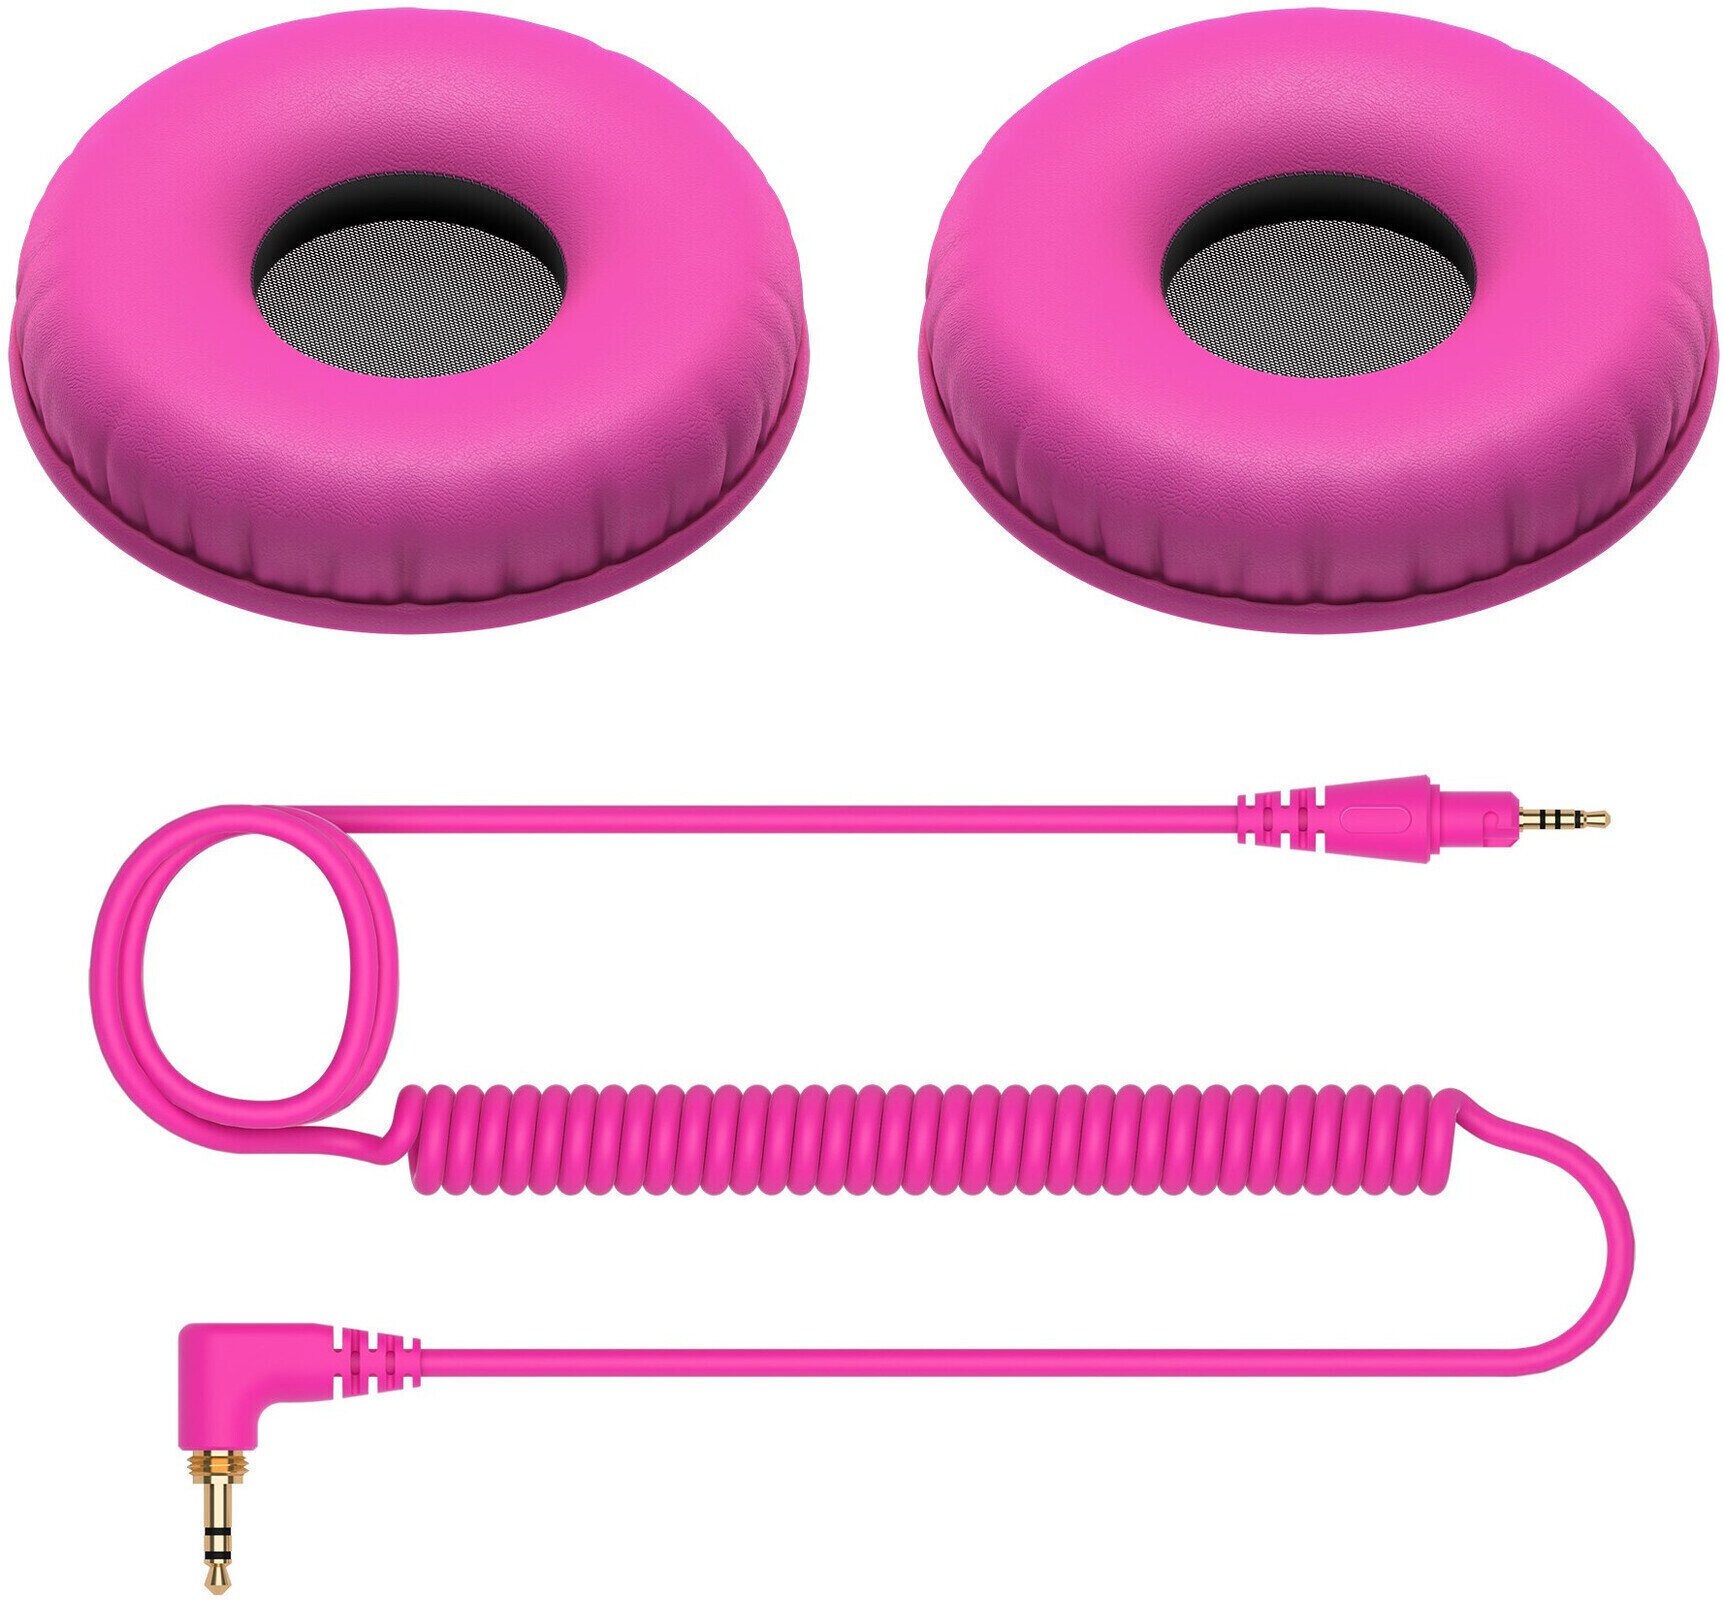 Ear Pads for headphones Pioneer HC-CP08 Ear Pads for headphones HDJ-CUE1-HDJ-CUE1BT Pink